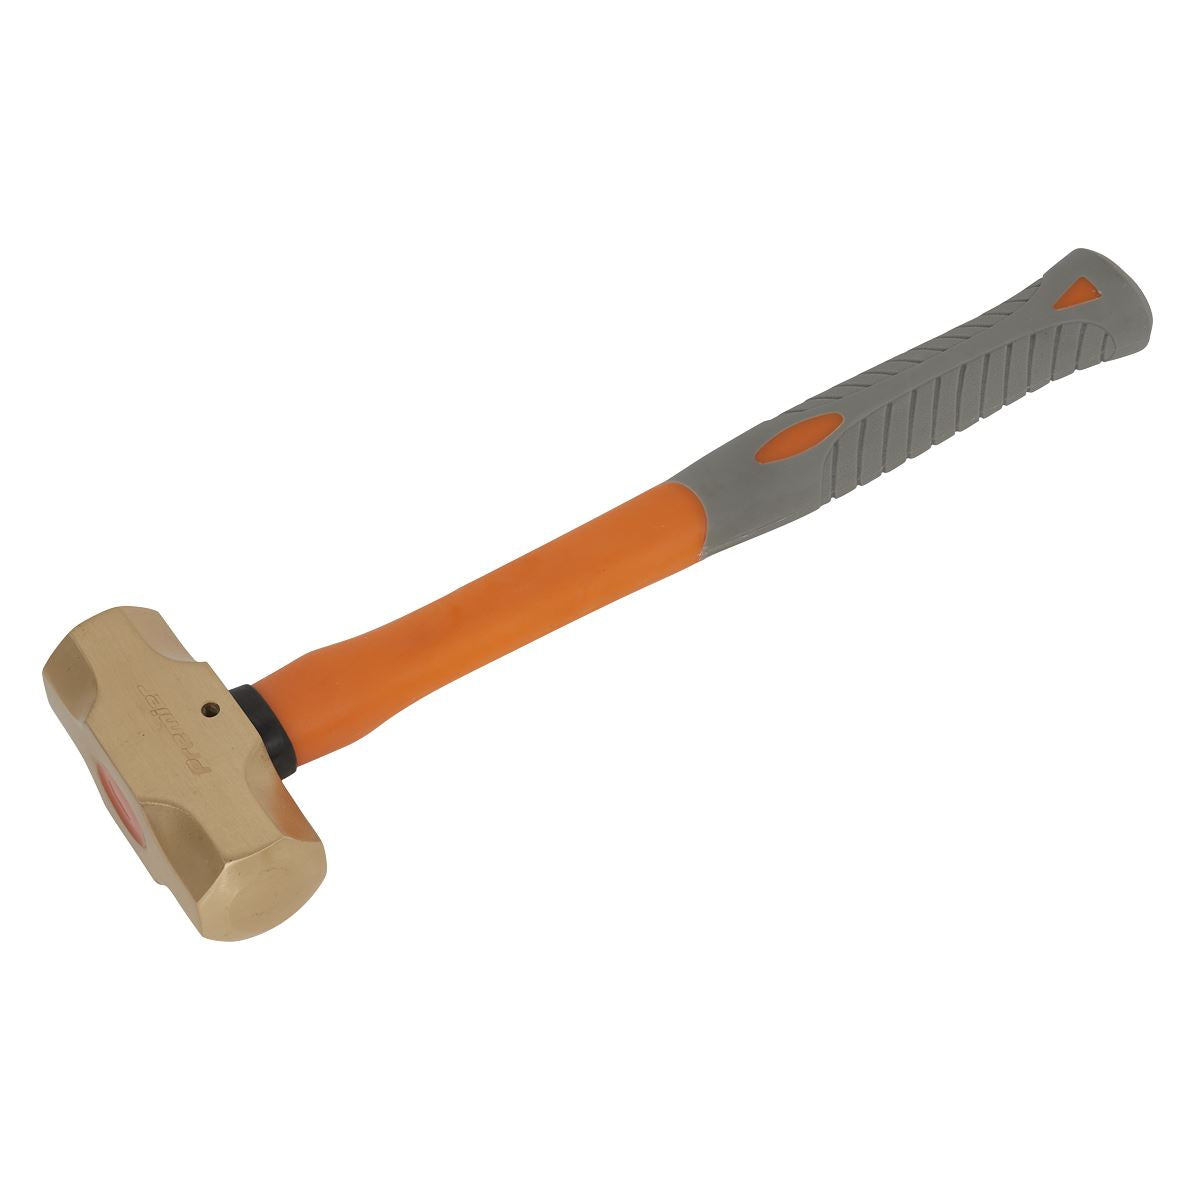 Sealey Premier Sledge Hammer 2.2lb - Non-Sparking